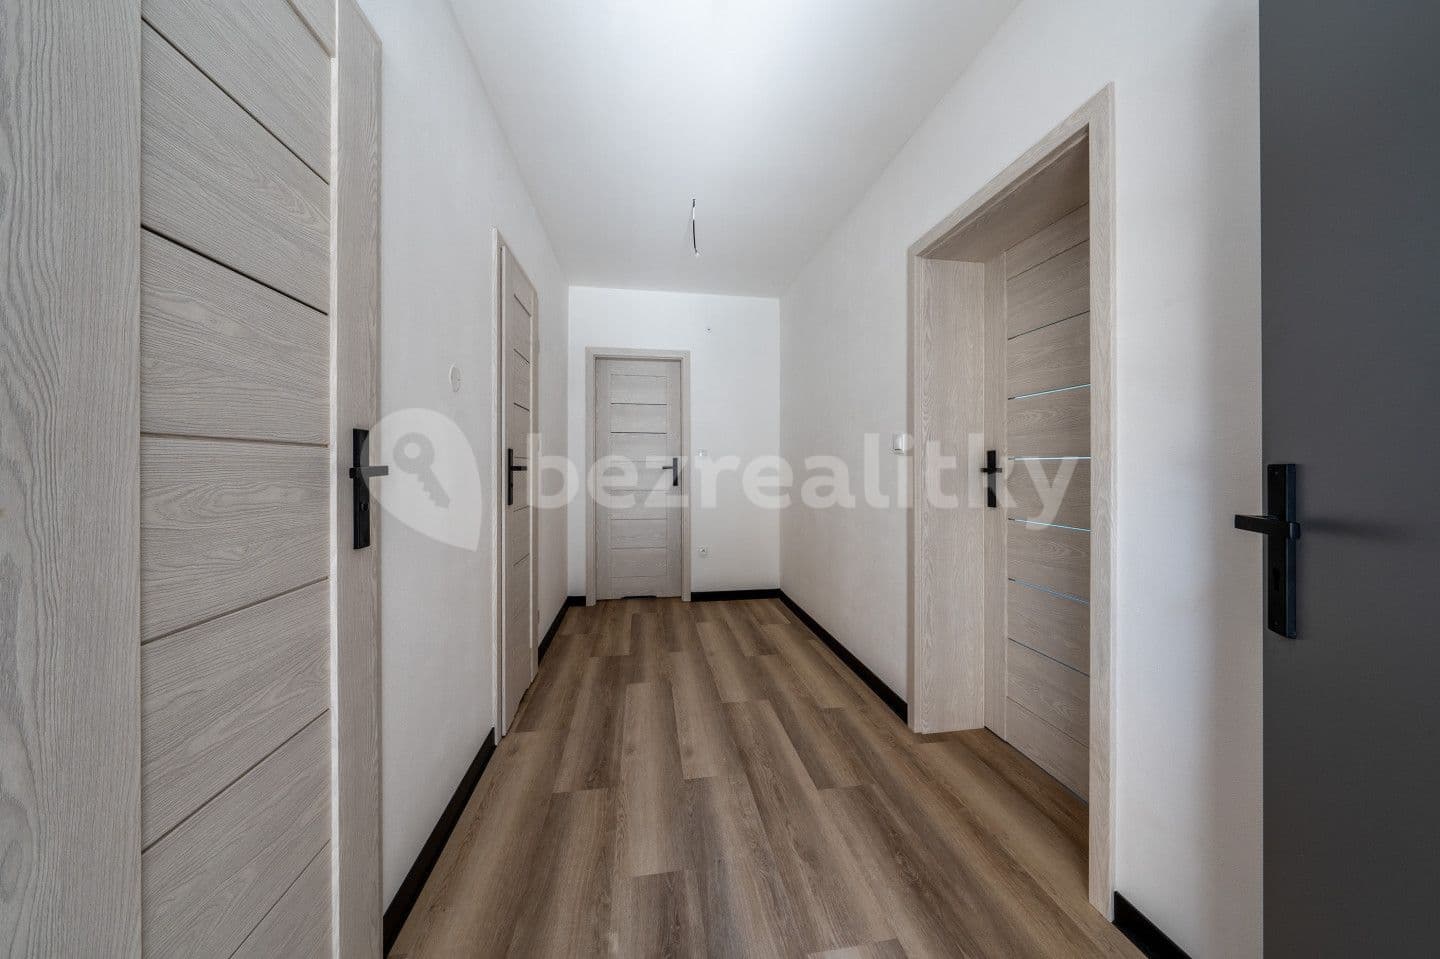 Predaj bytu 3-izbový 83 m², Raisova, Jablonec nad Nisou, Liberecký kraj